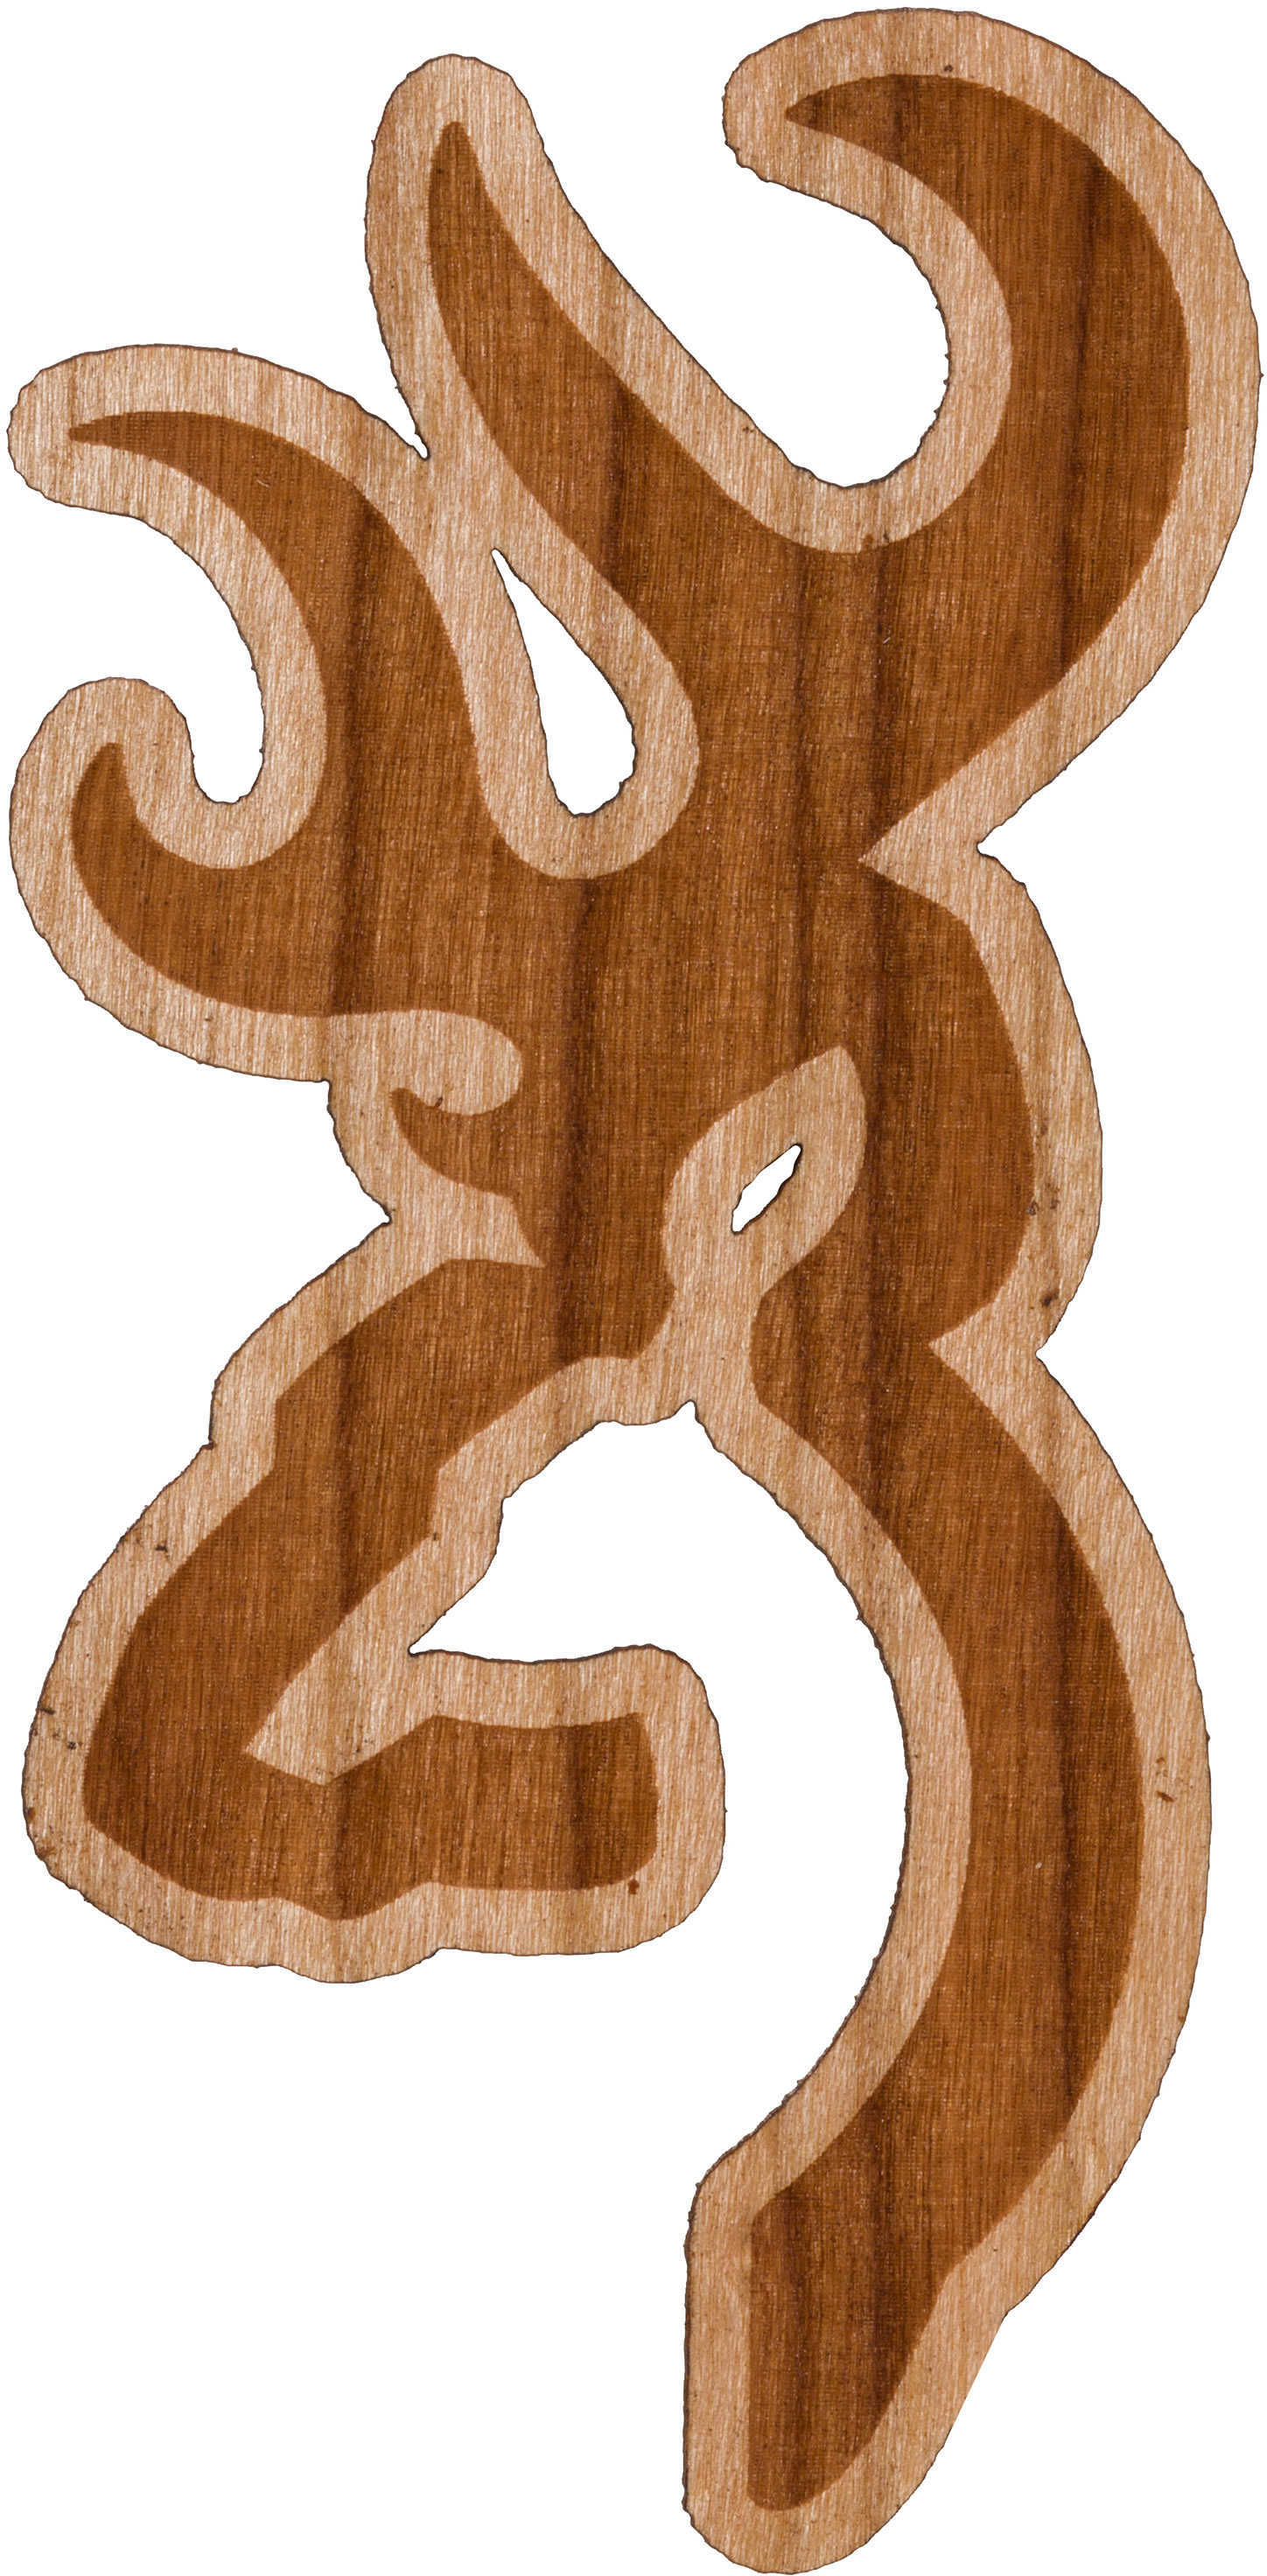 Browning Decal Wood Buckmark Md: 3922699658